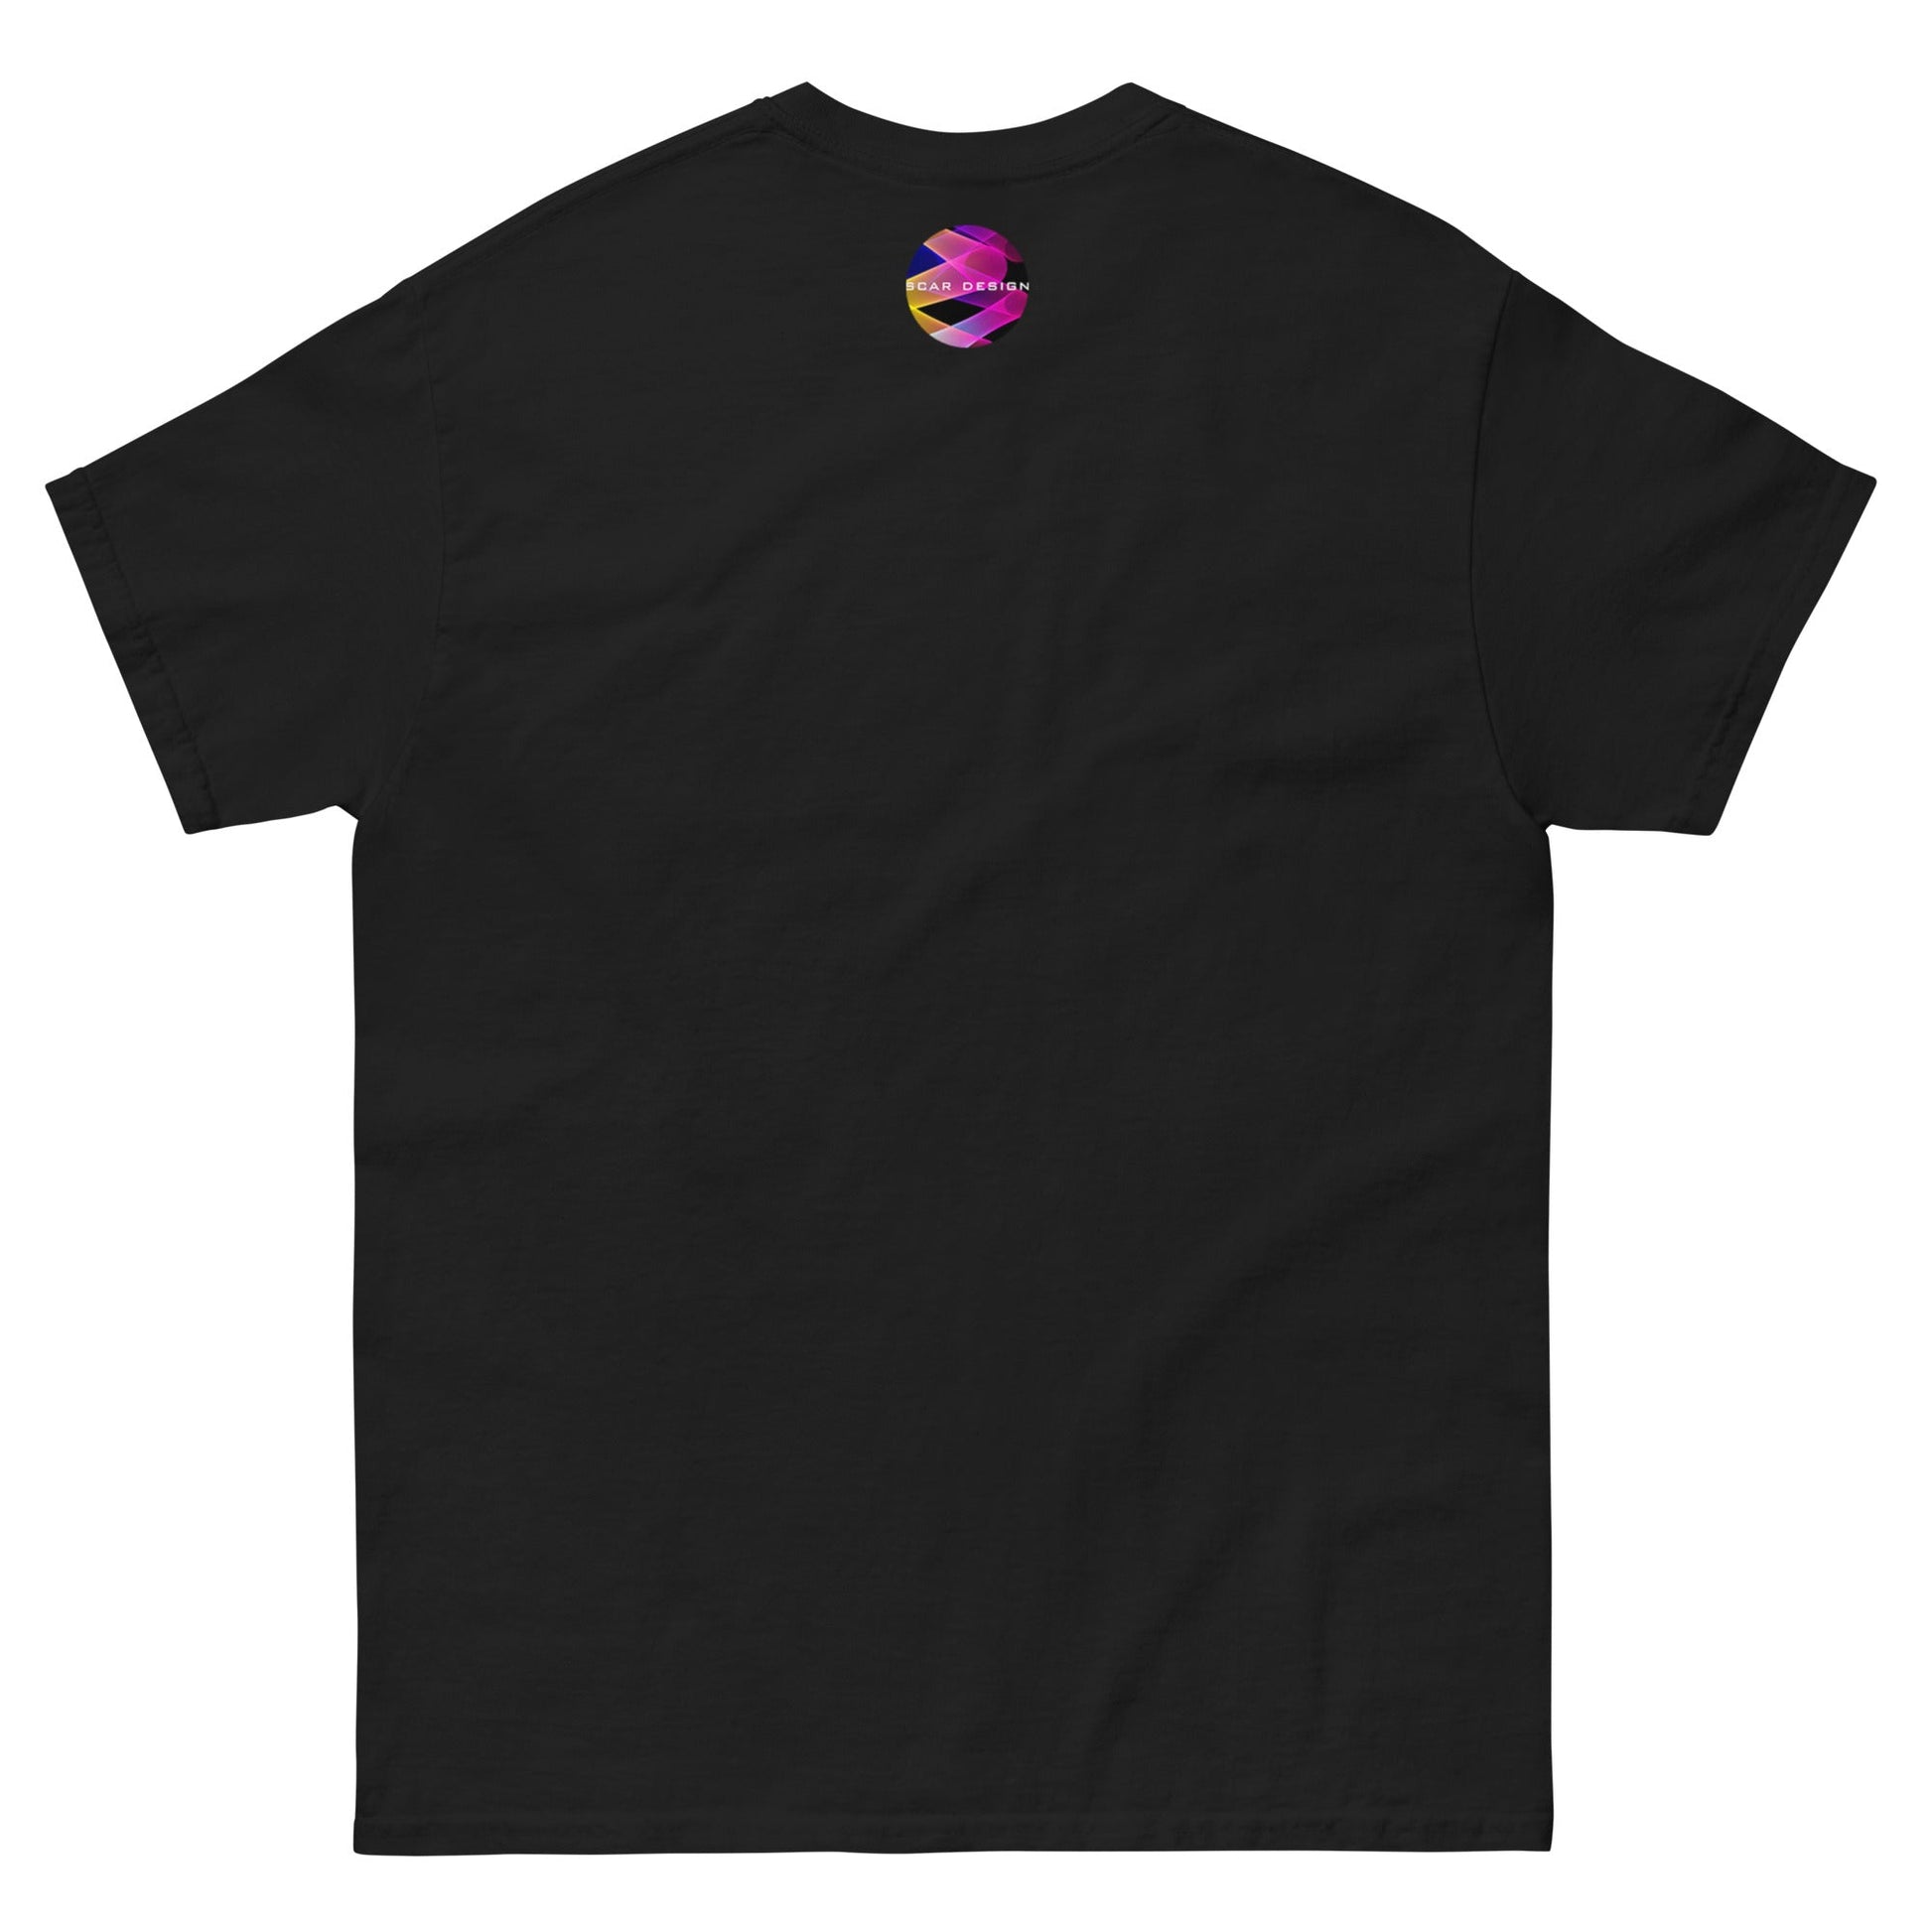 Scar Design T shirt Death T-Shirt